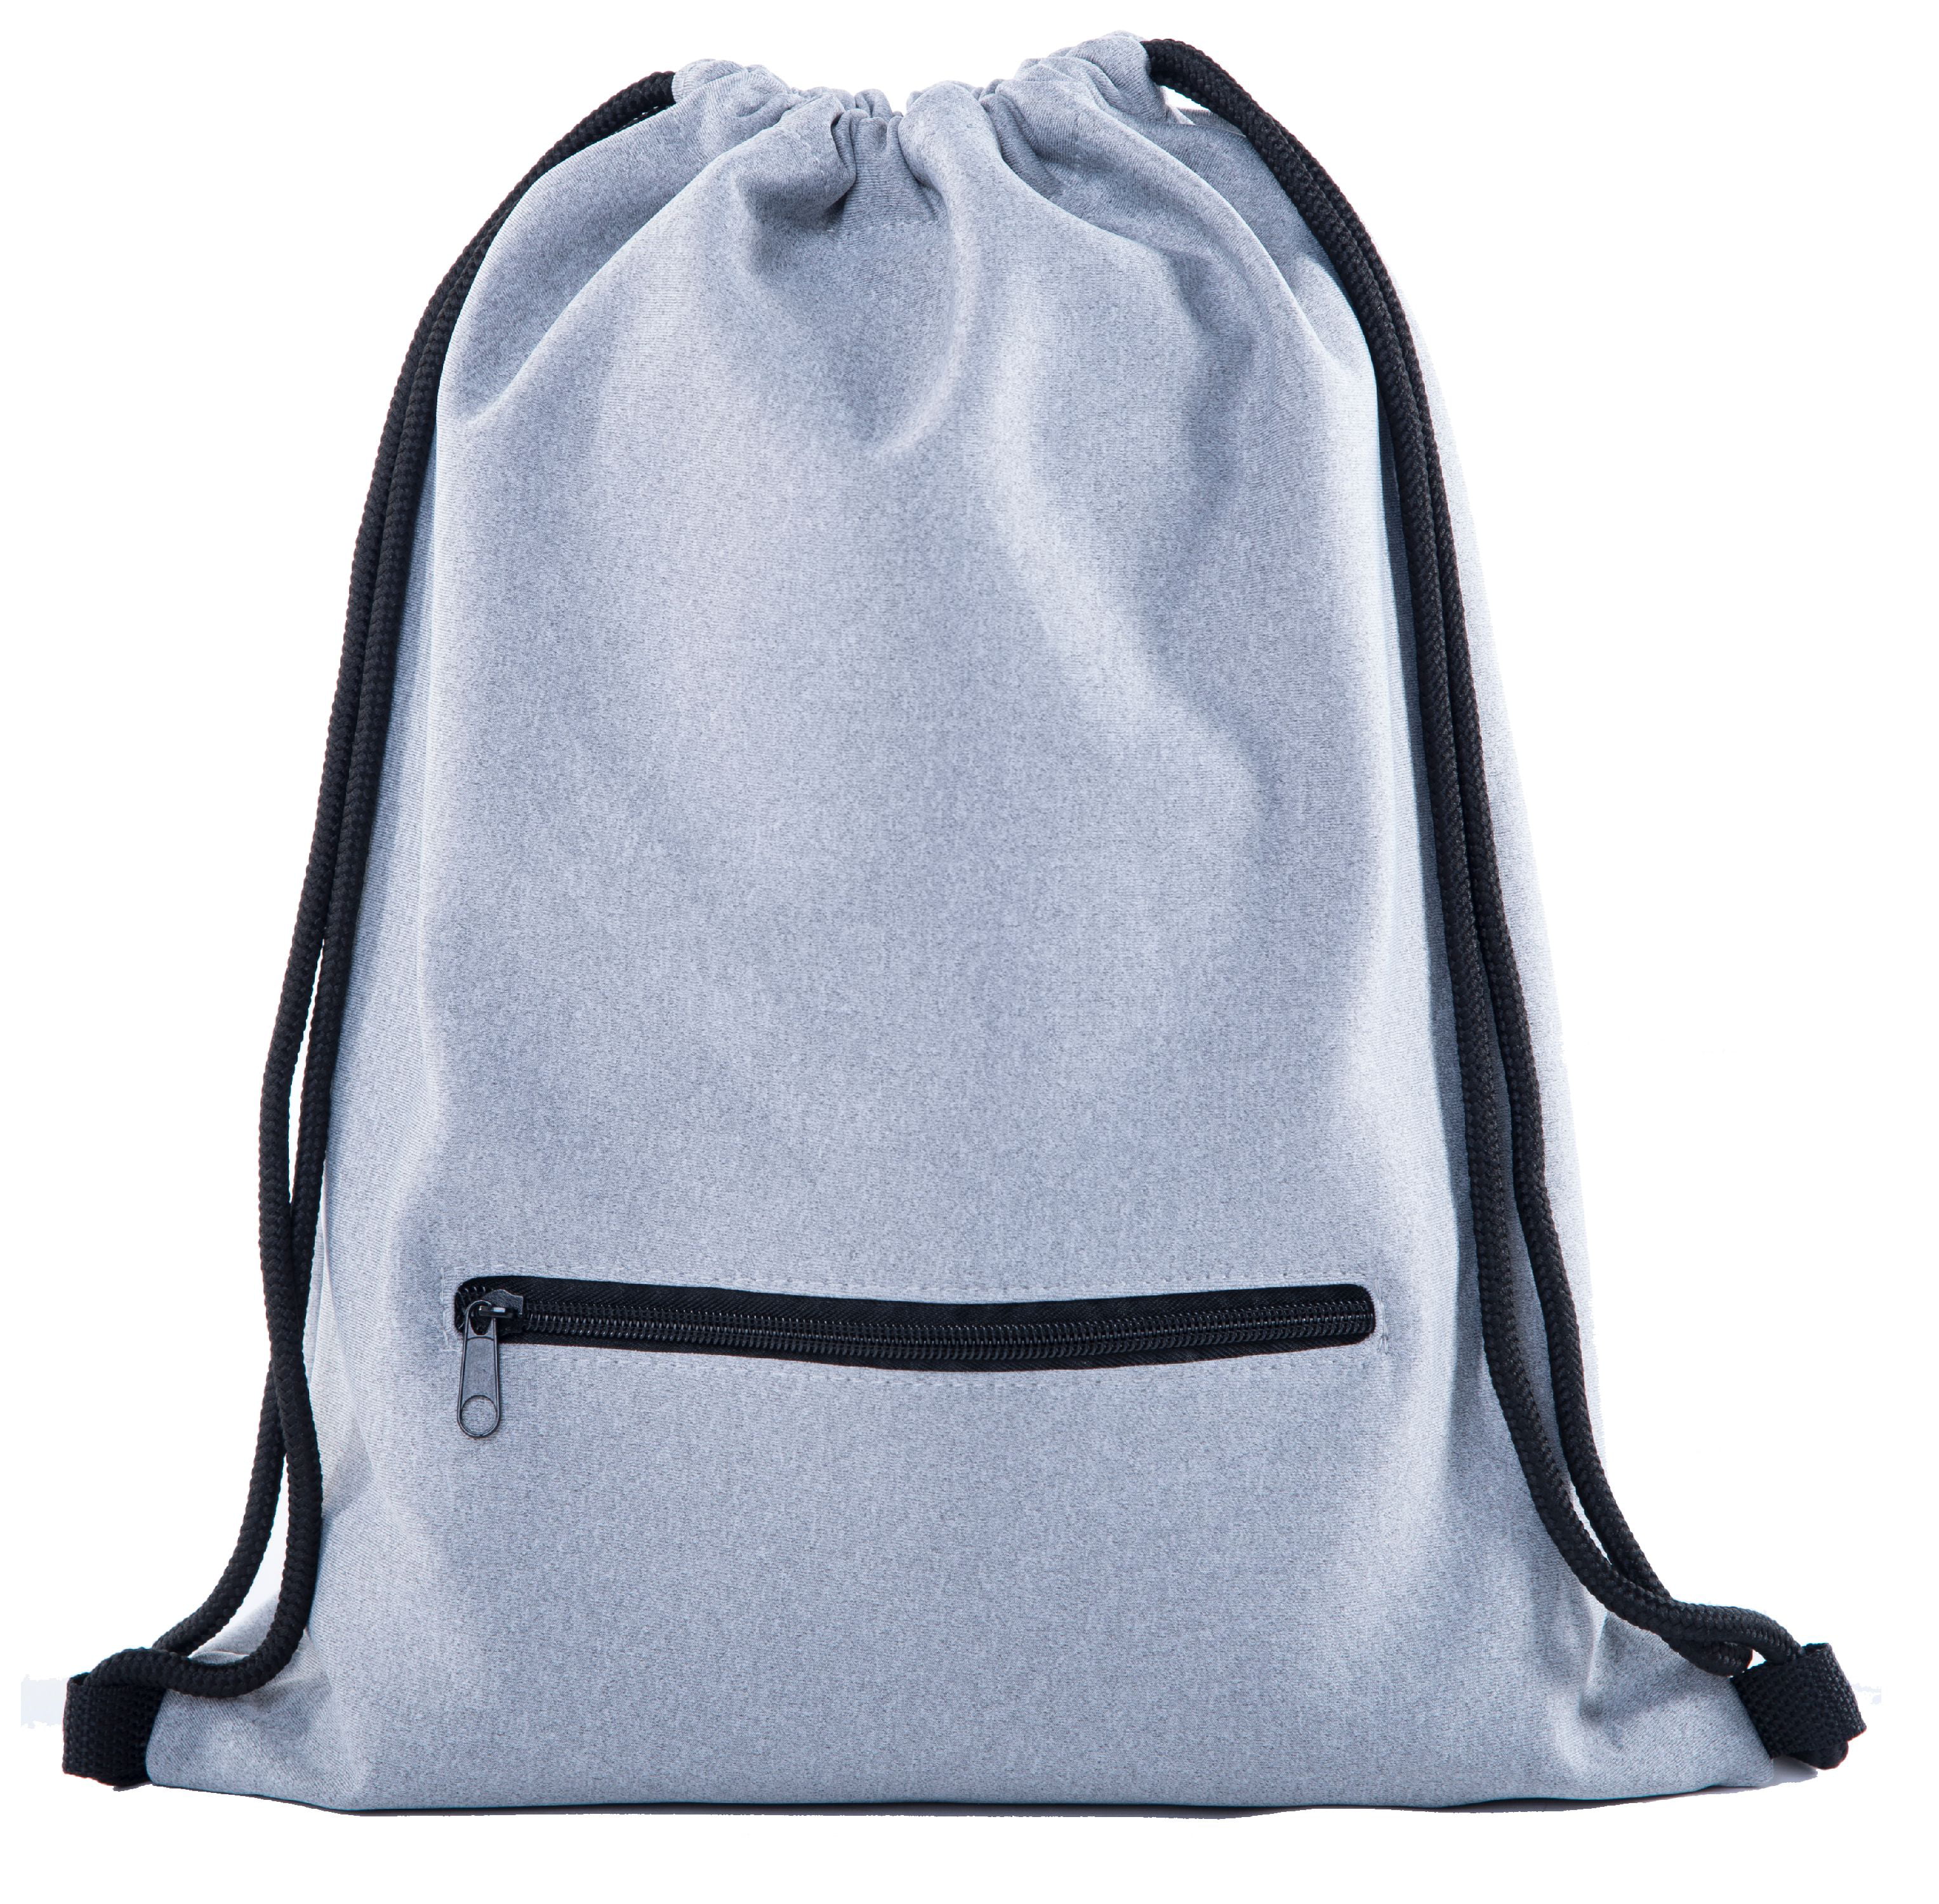 Soft Texture Drawstring Backpack - Quick Access Zipper Pocket